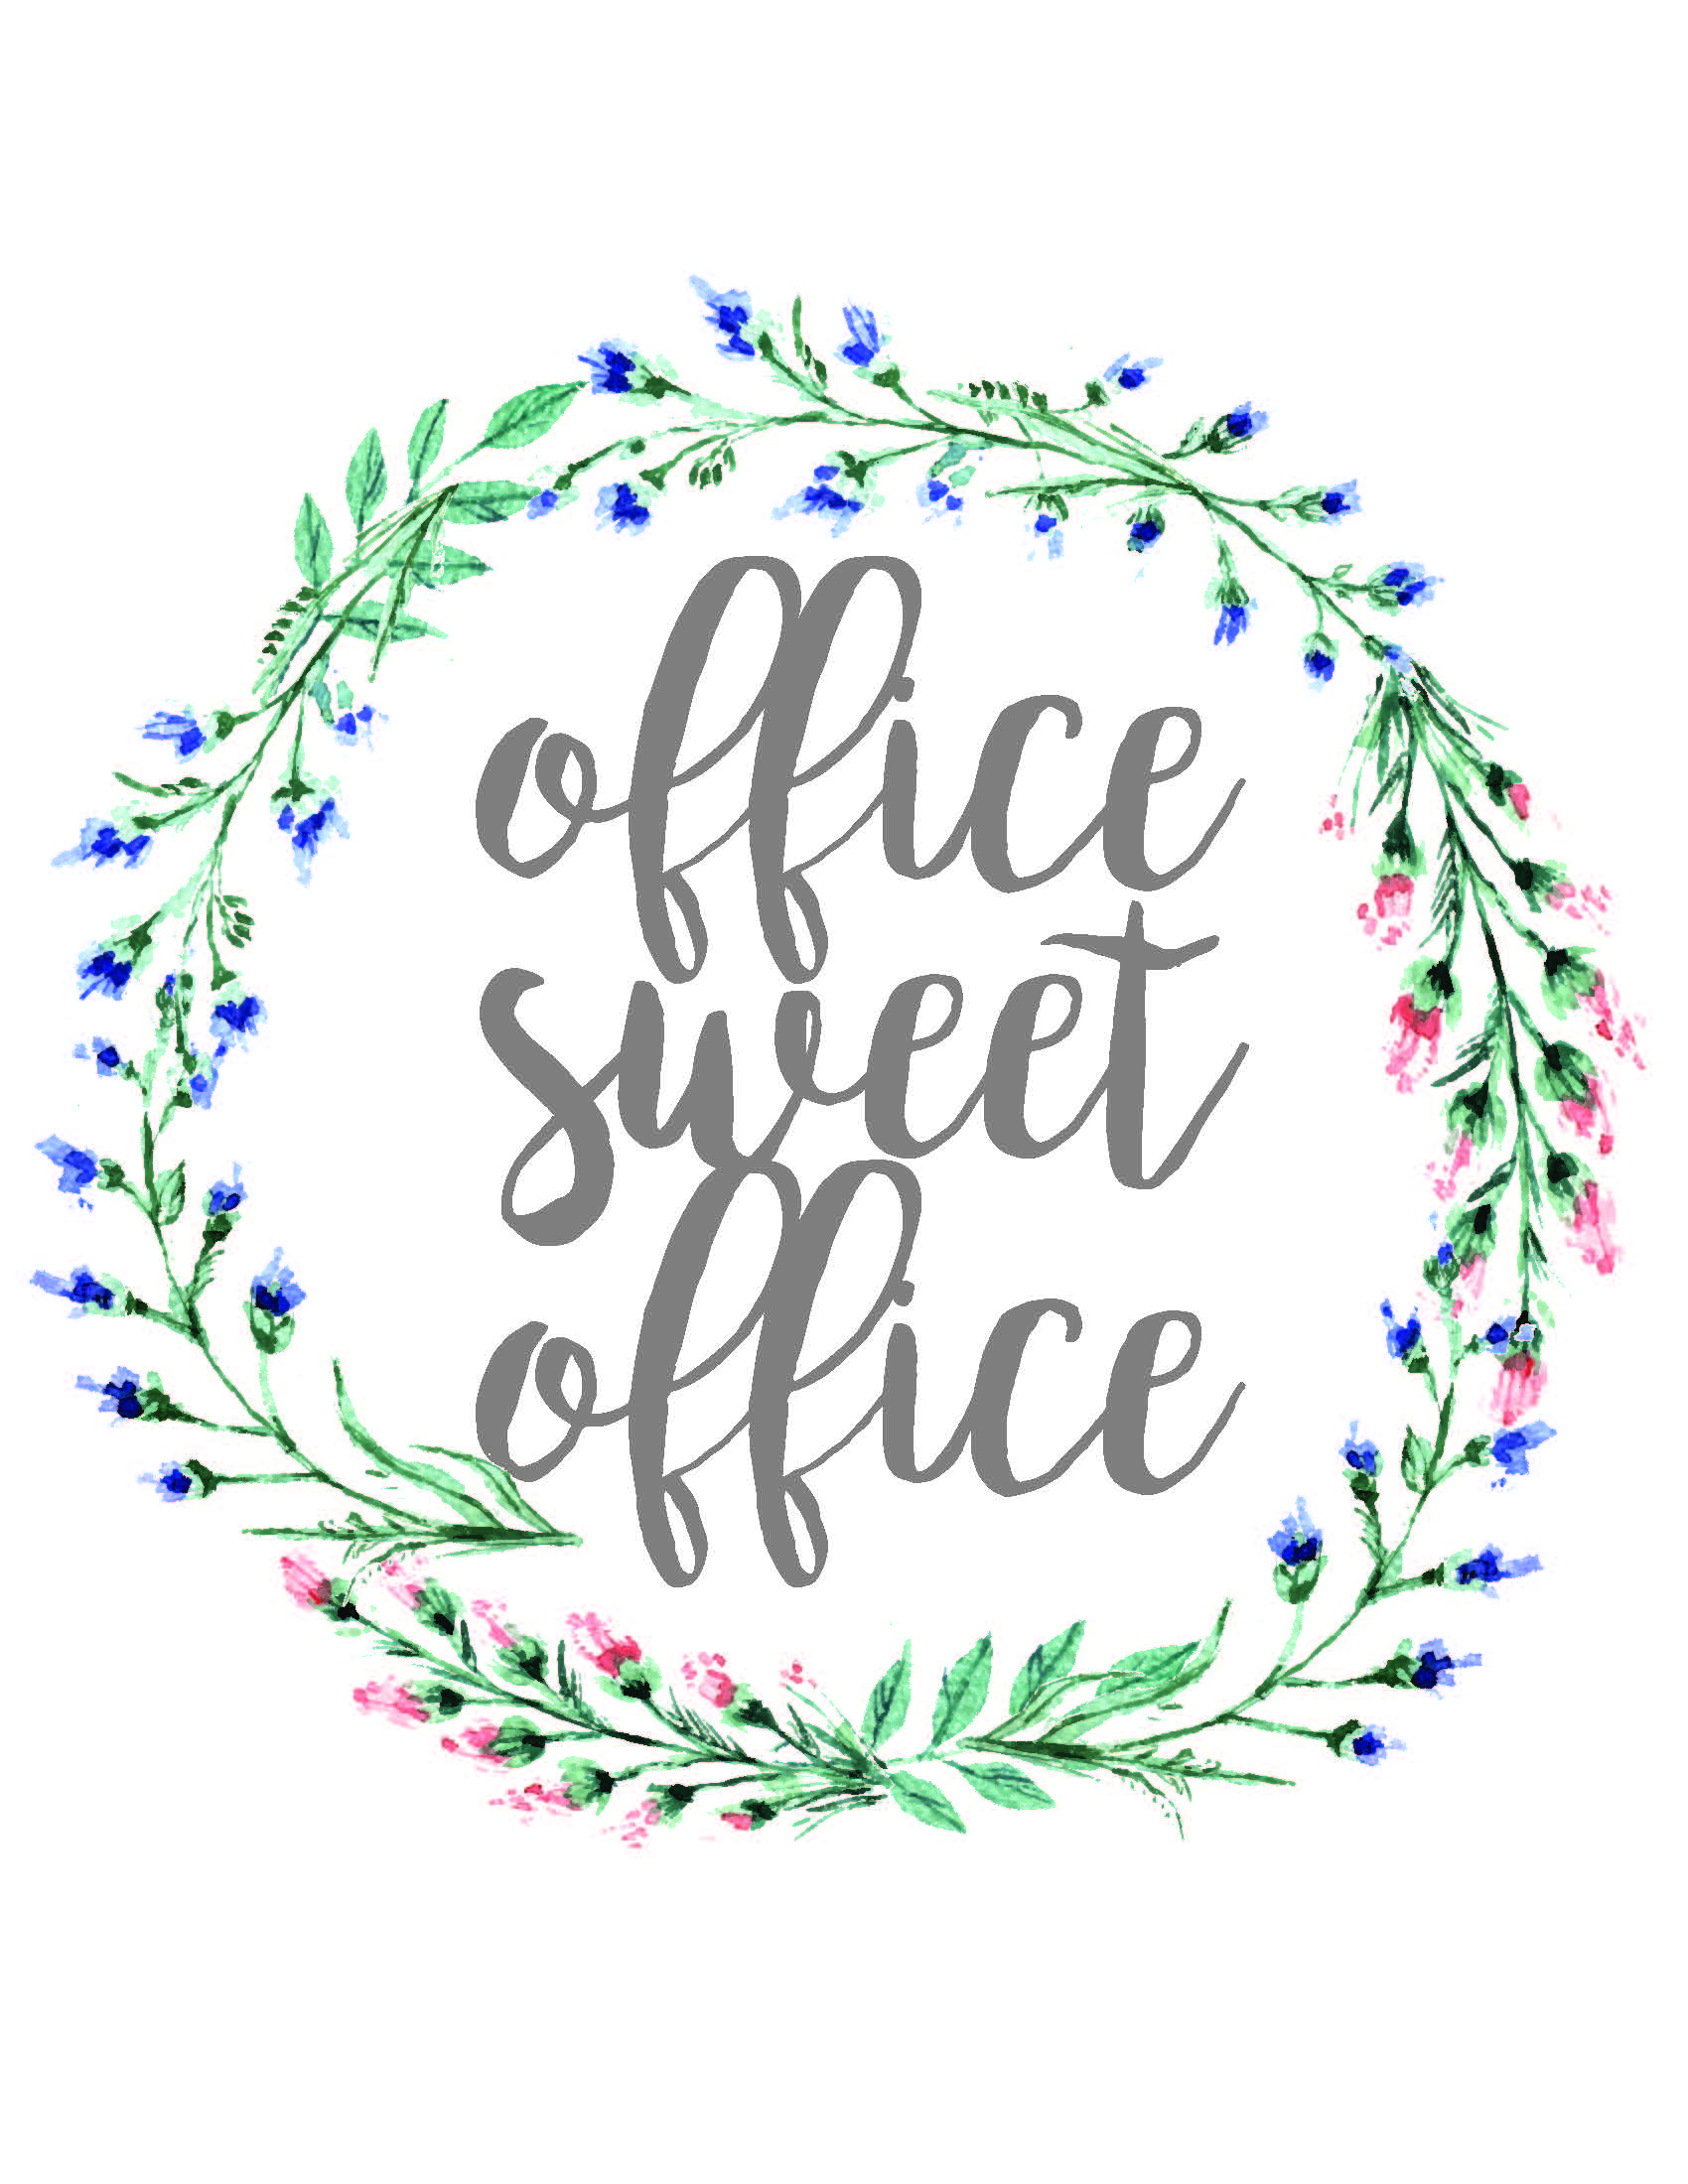 Home Sweet Home, Dorm Sweet Dorm, & Office Sweet Office Free